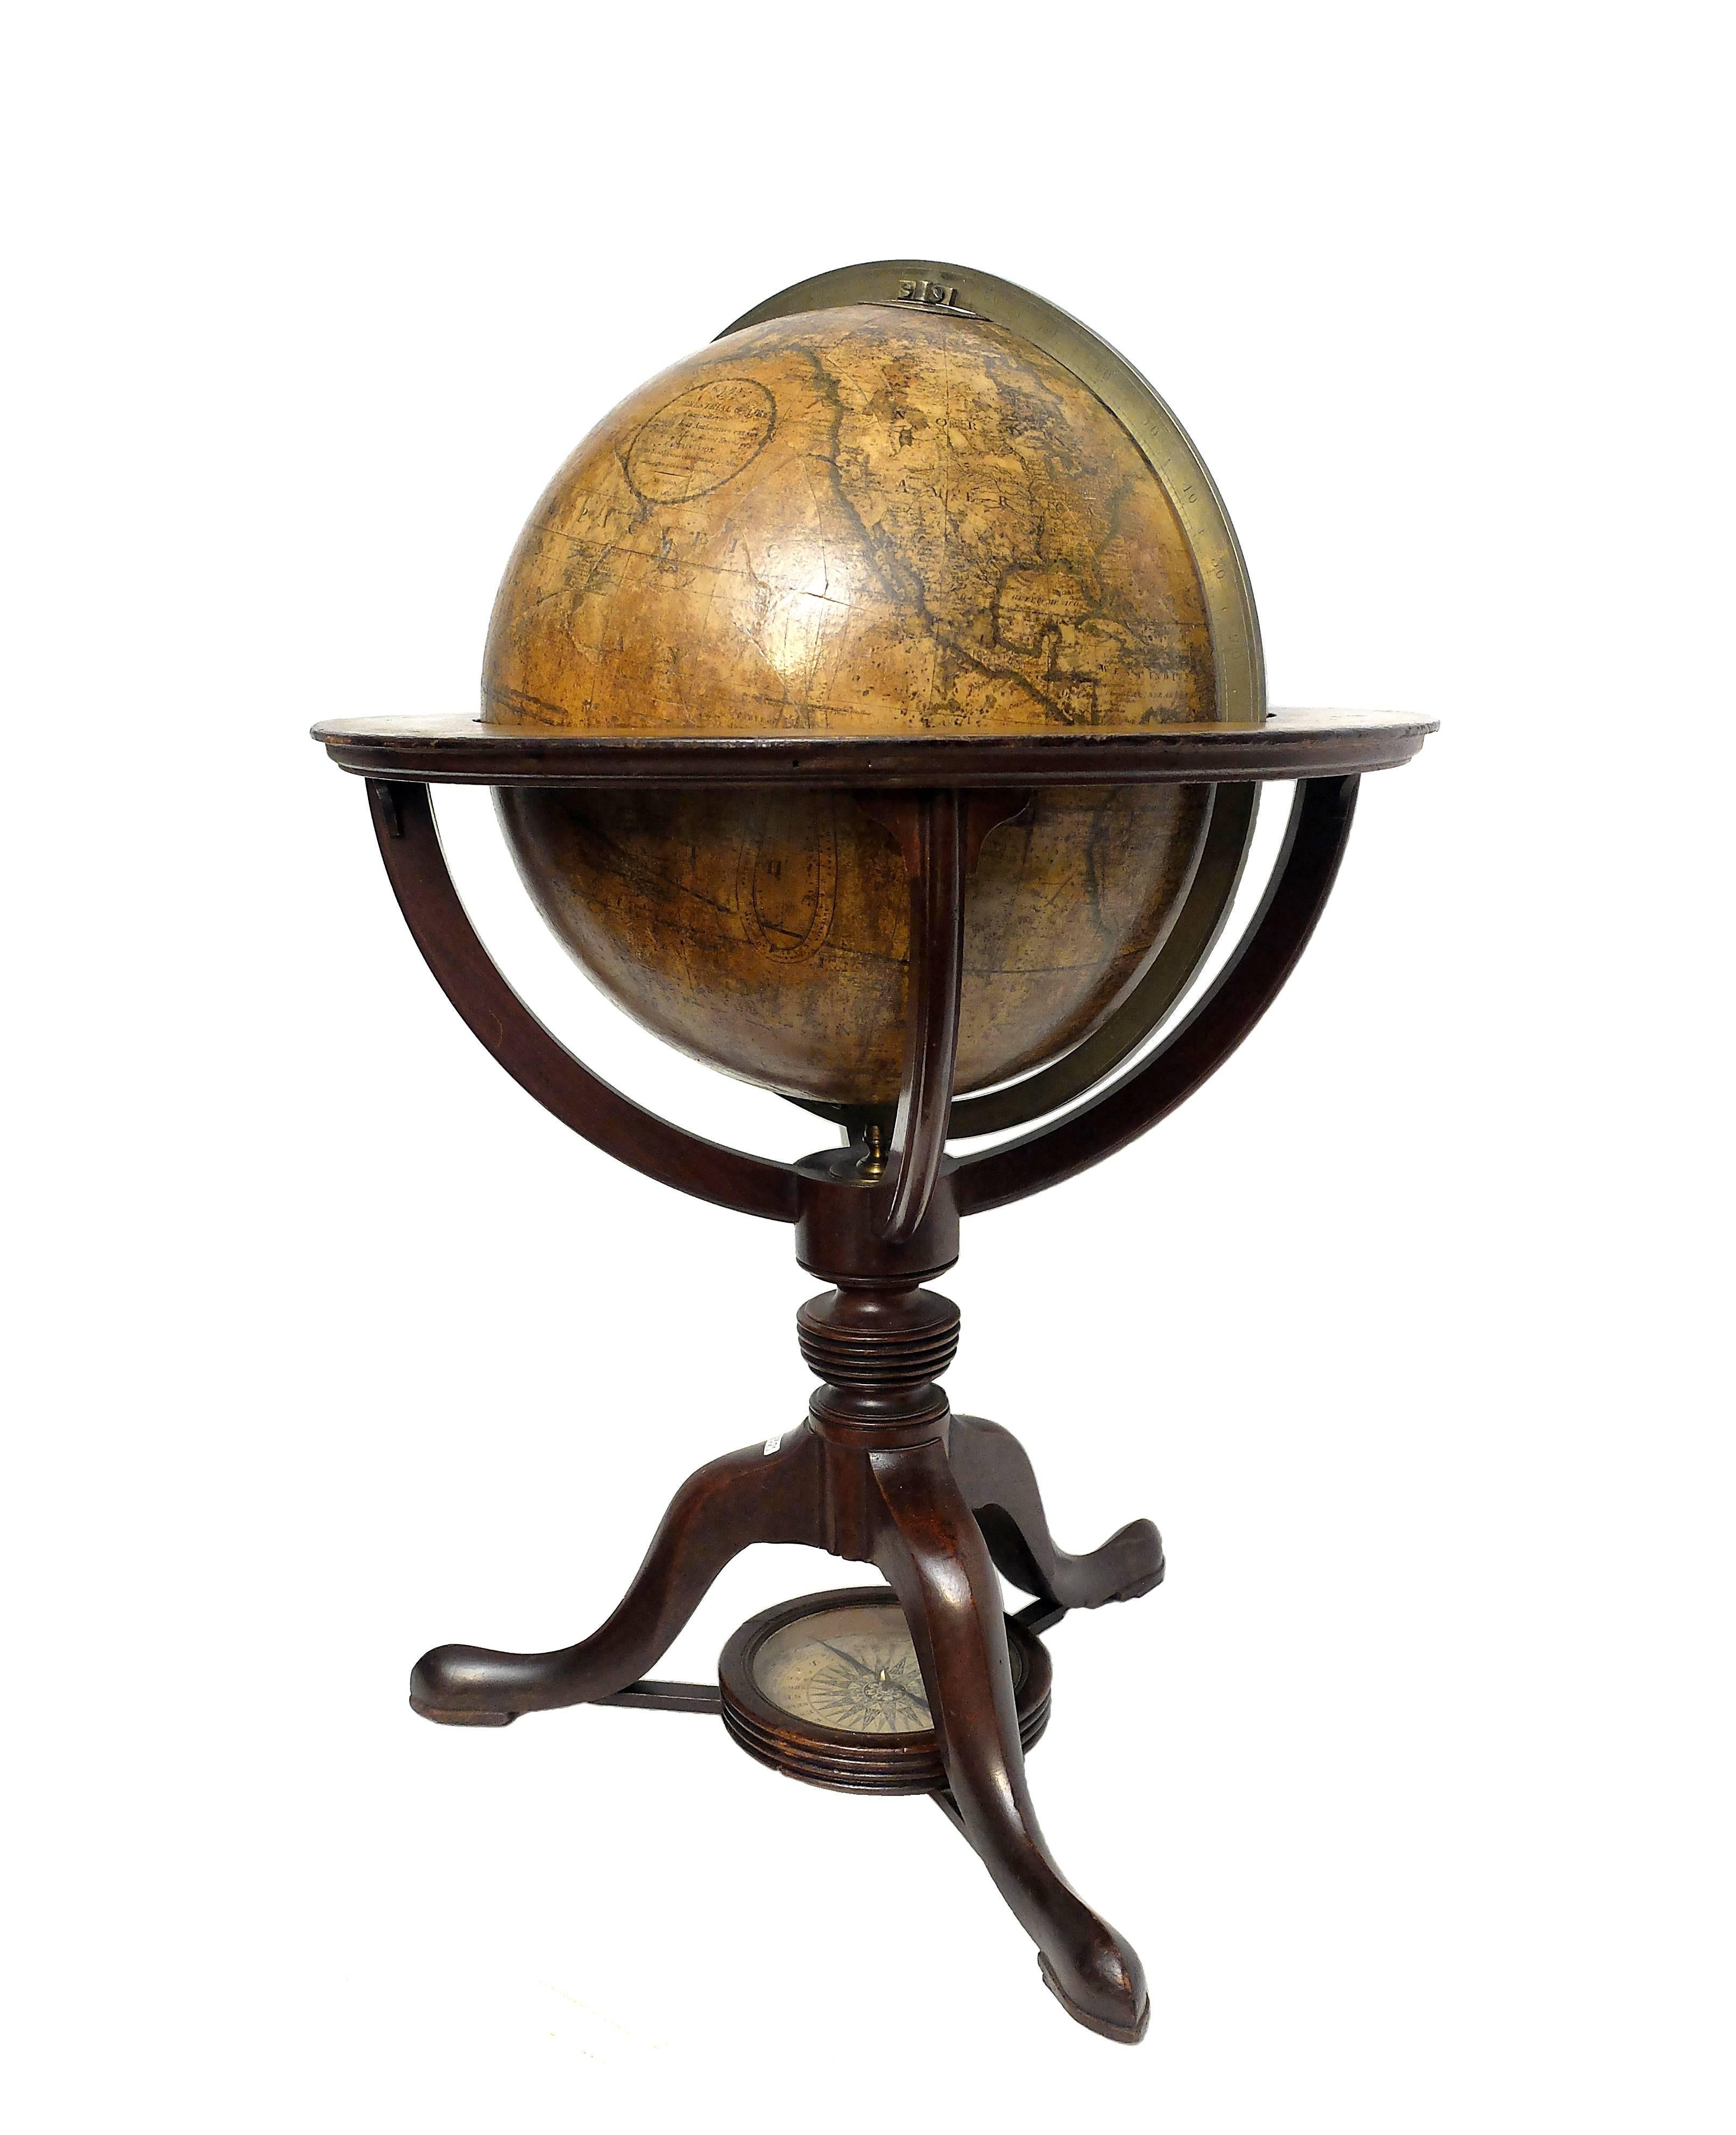 Metal Terrestrial Globe, Signed Cary, London, 1789